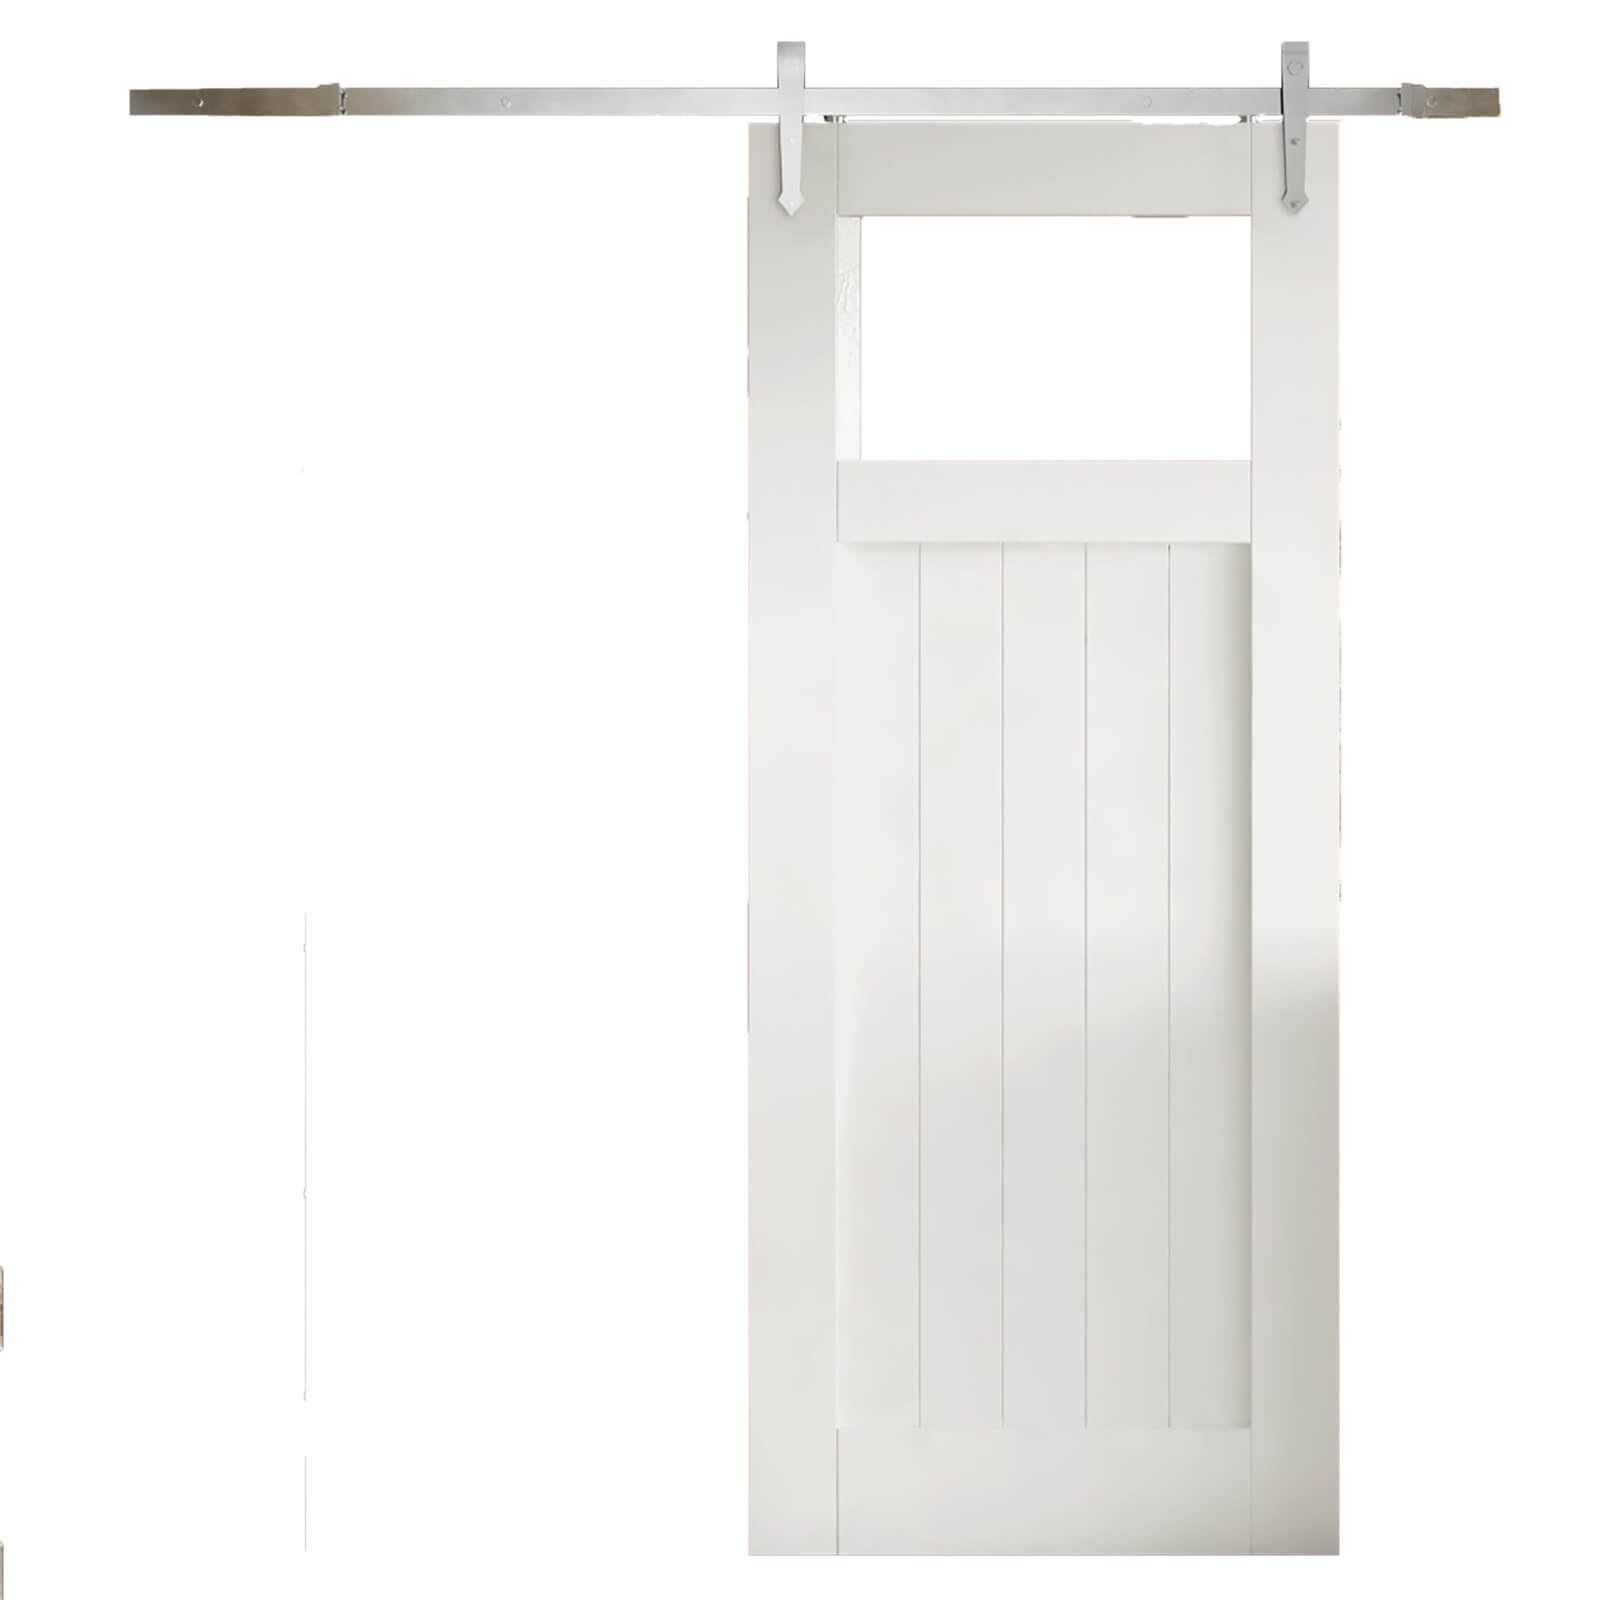 Cottage White Primed Clear Glazed FLB Sliding Barn Door with Provincial Track 2073 x 862mm